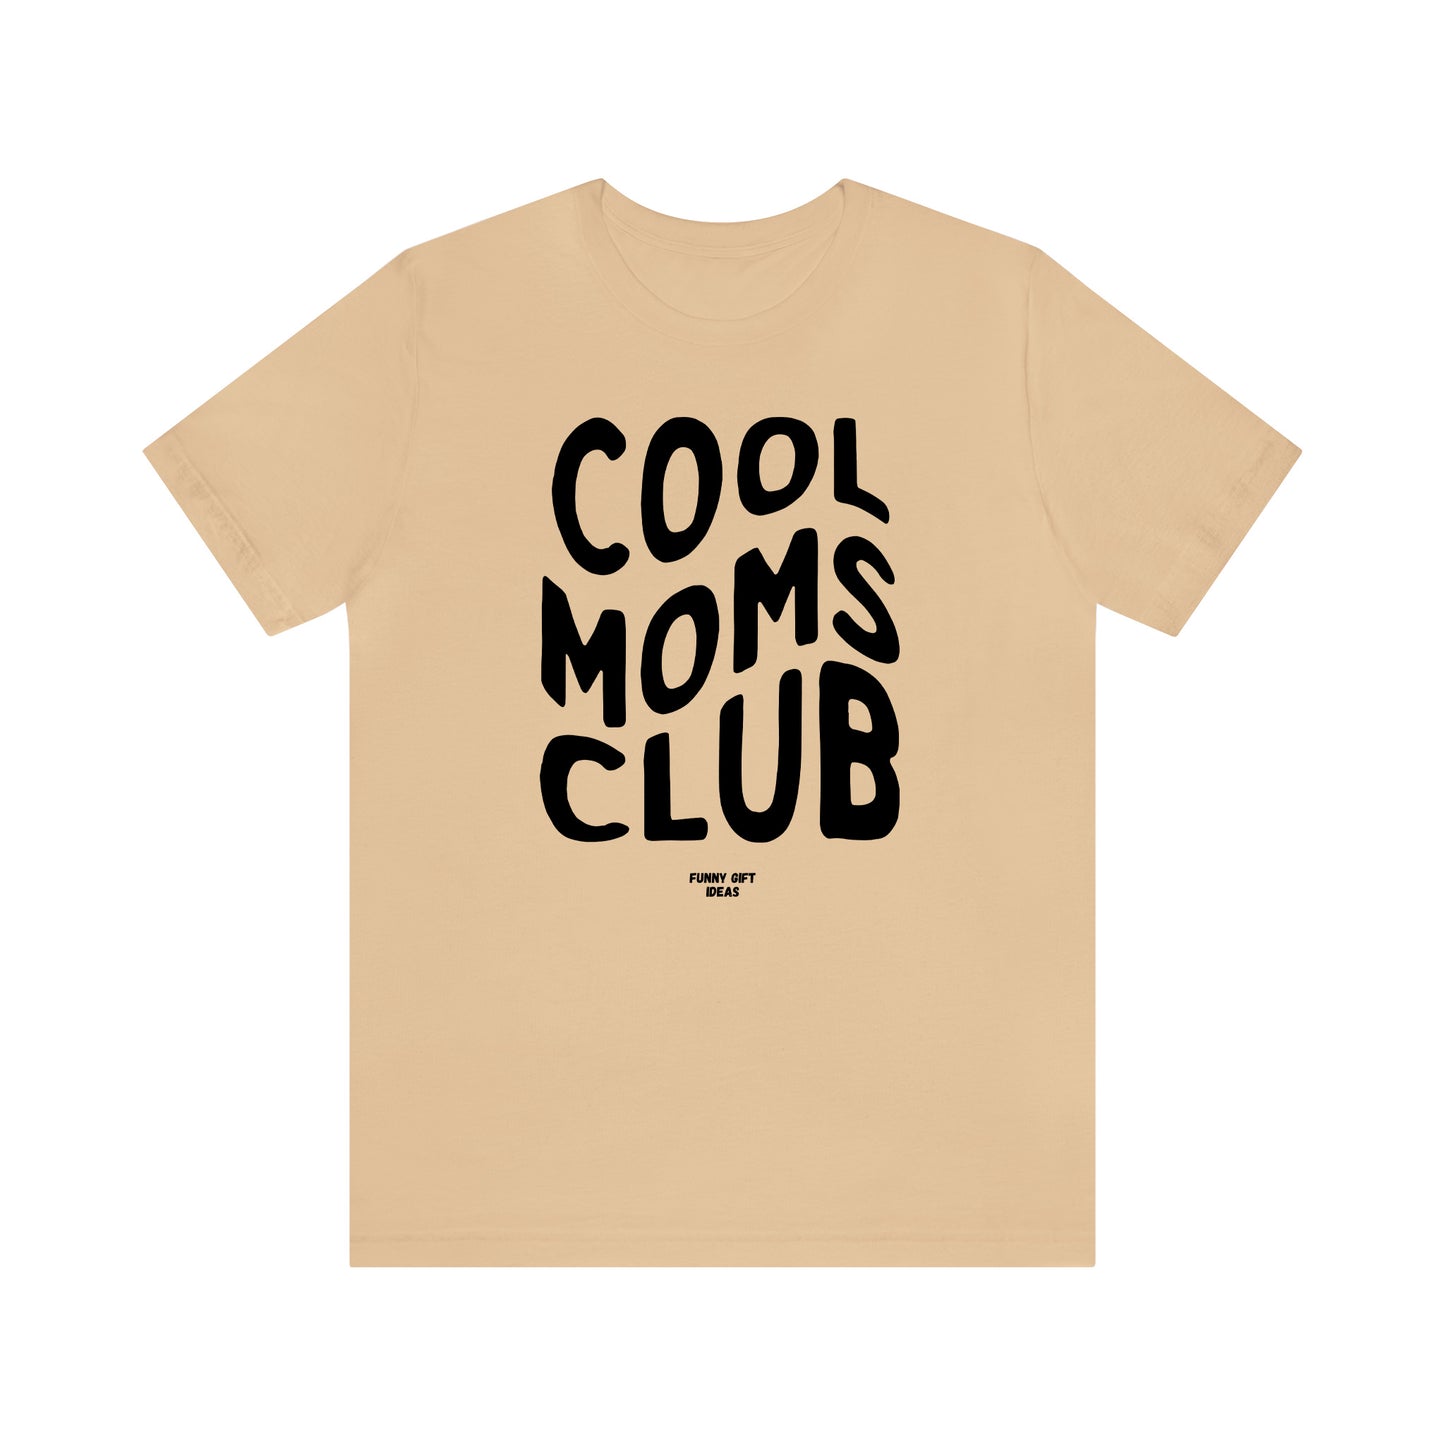 Funny Shirts for Women - Cool Moms Club - Women's T Shirts